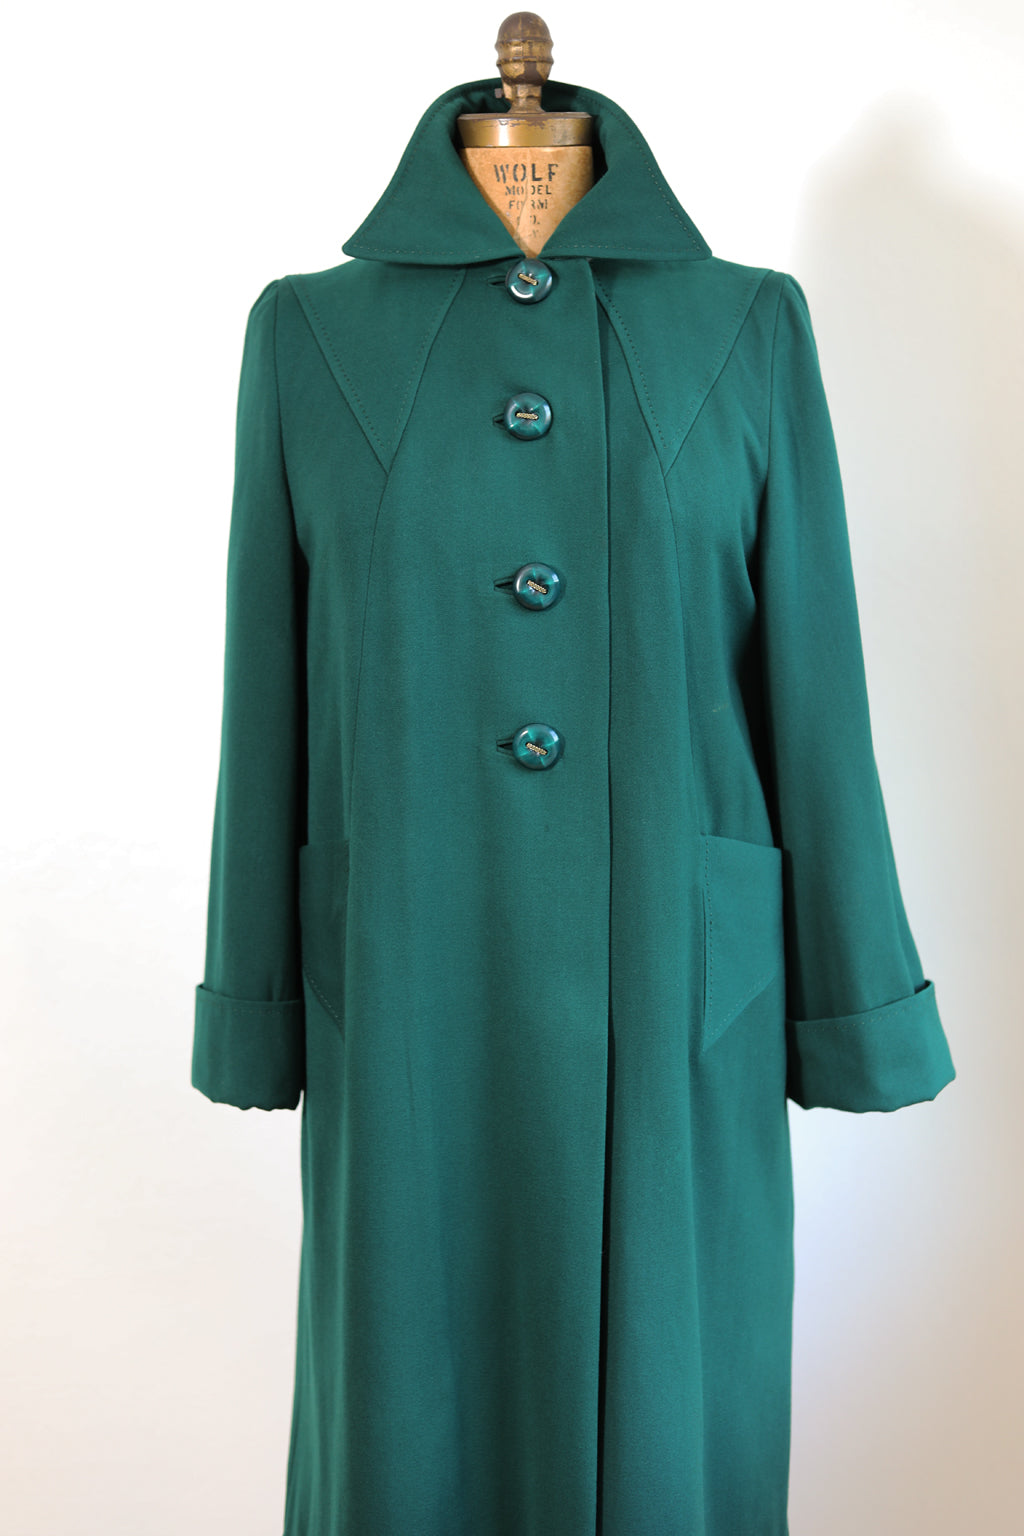 Vintage 1940s A-line Coat - Rare PINE GREEN Gabardine Deco w LUSCIOUS Swirled Plastic Buttons + 9 V Motifs! Size S - M